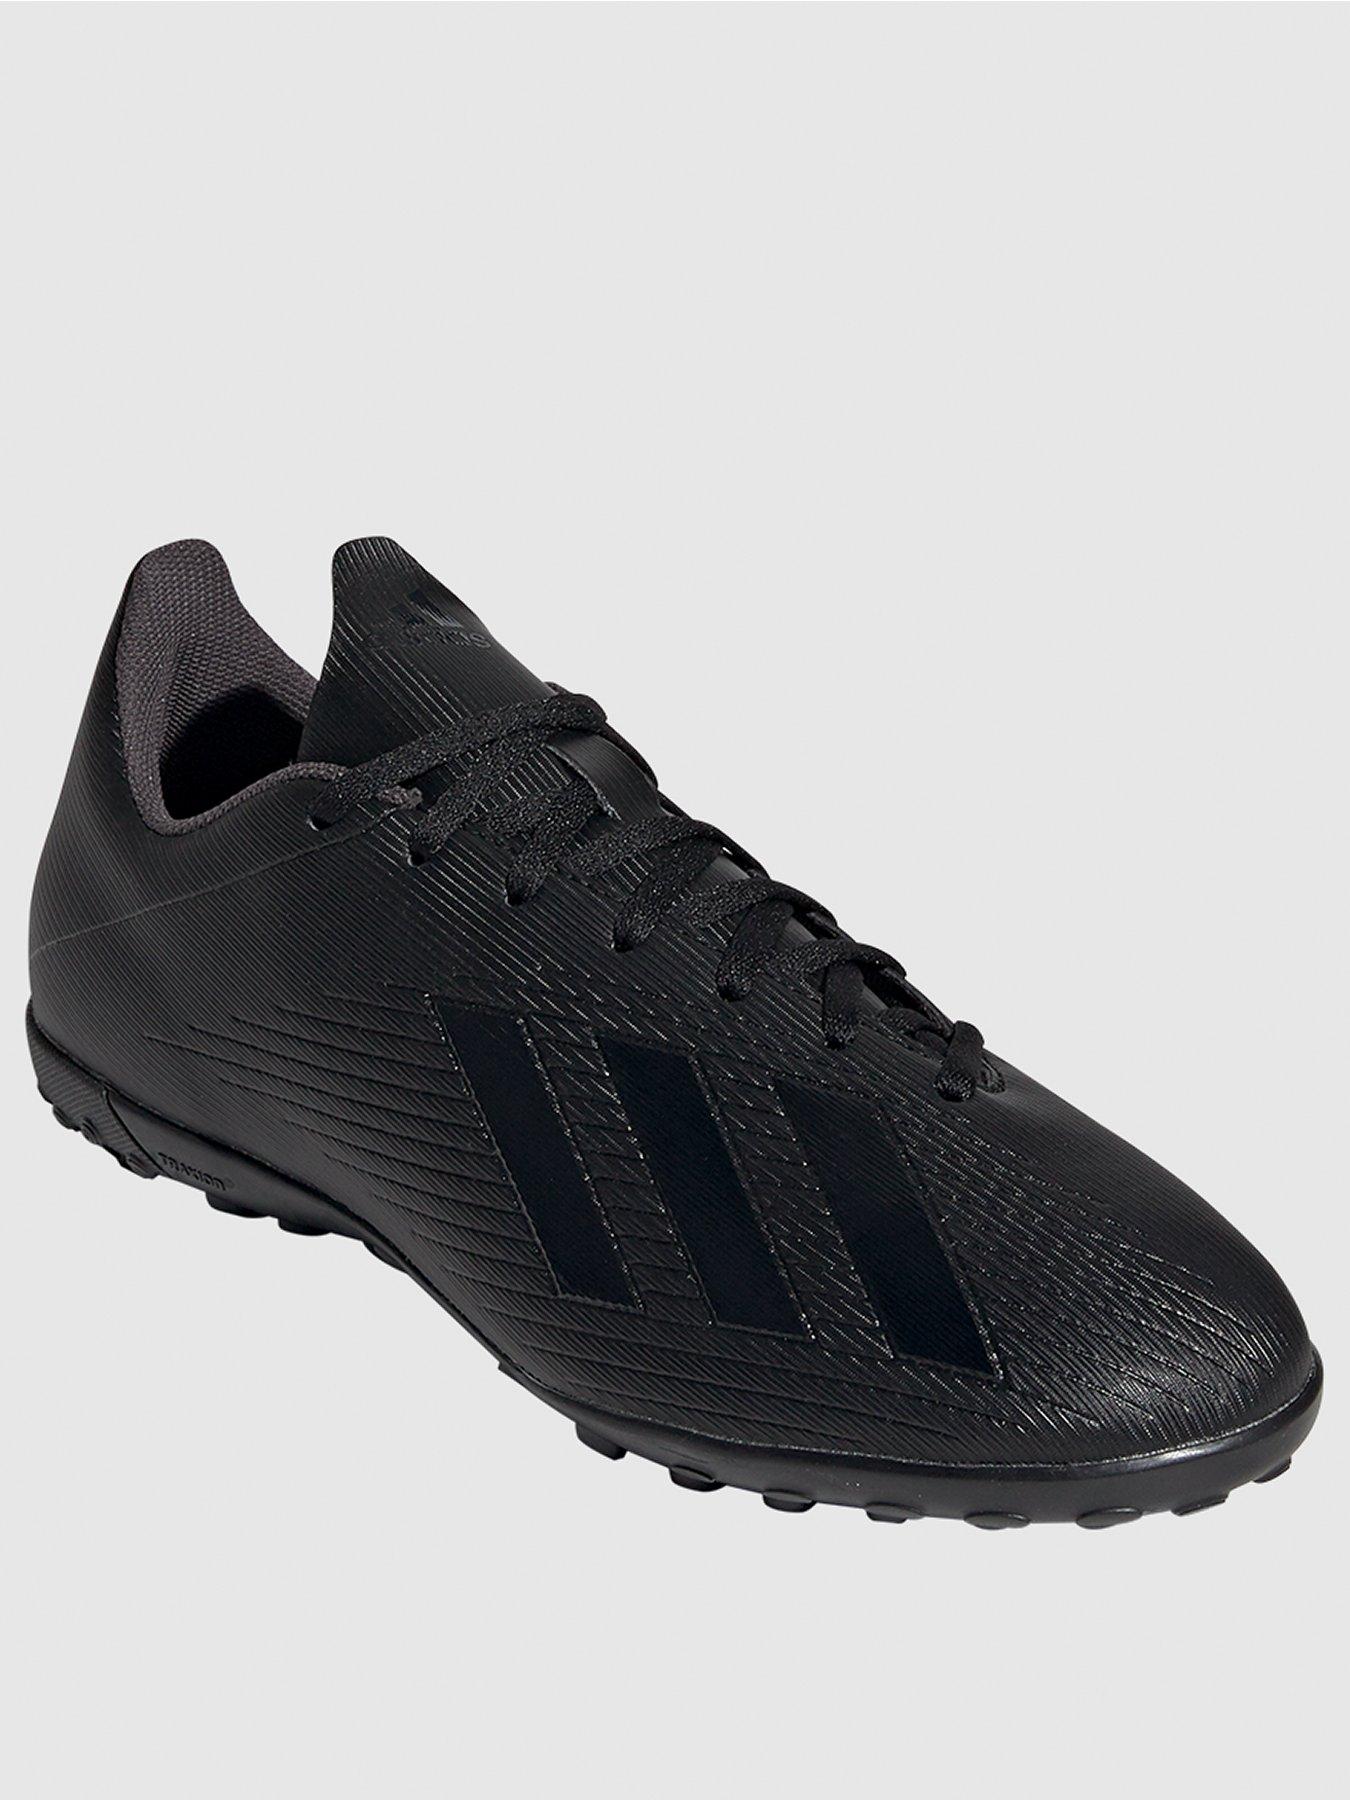 adidas football boots size 6